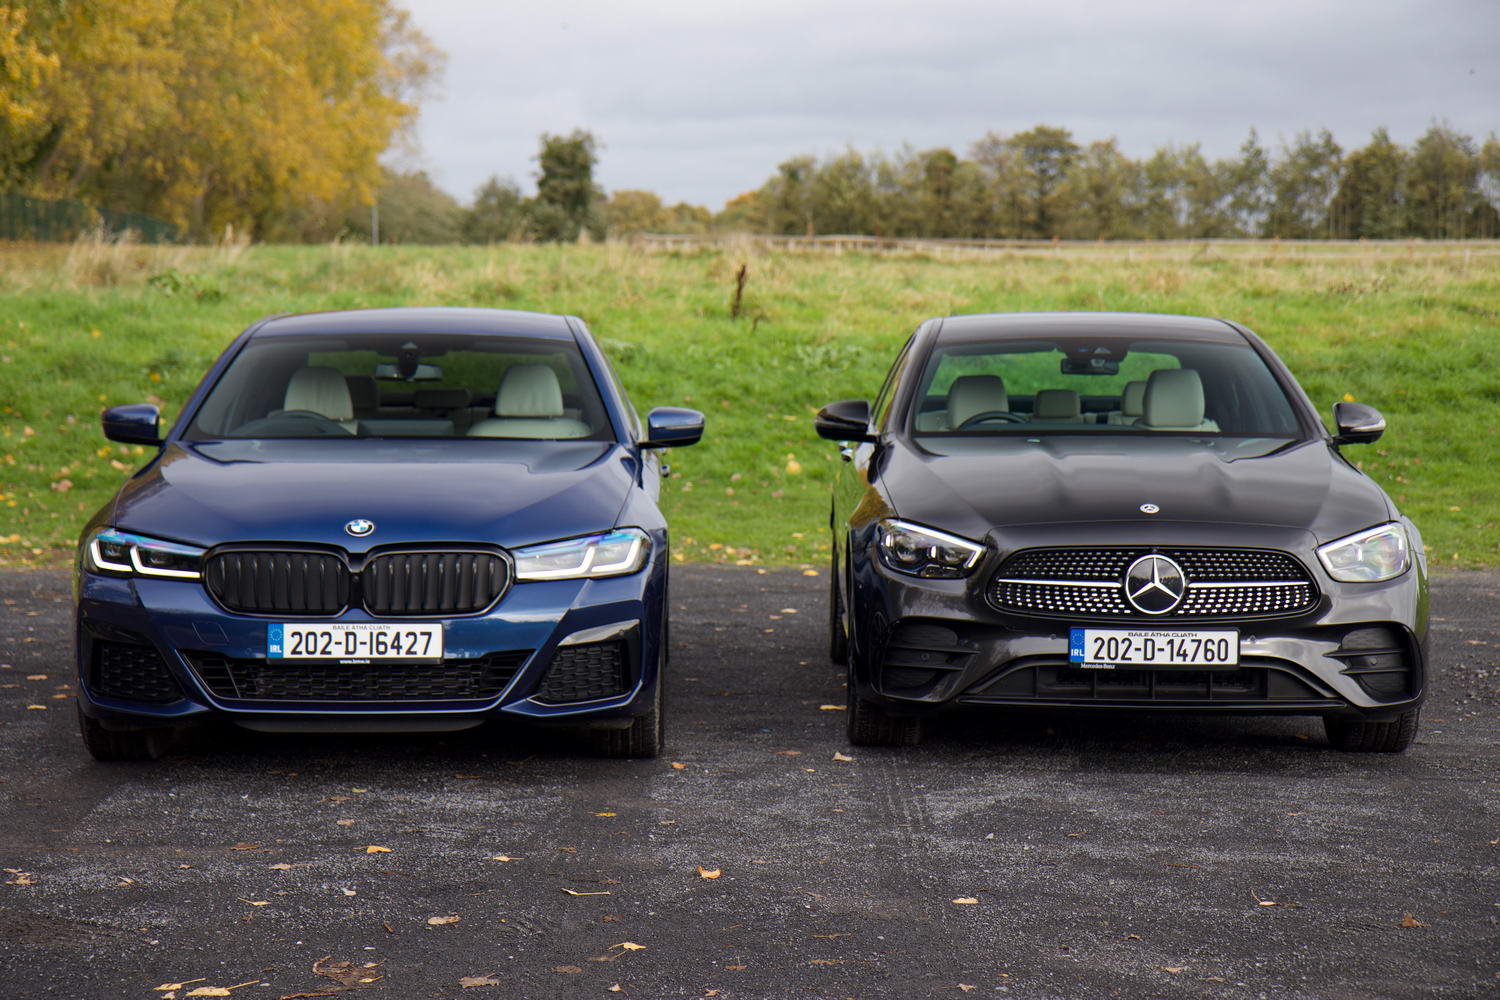 BMW 5 Series vs. Mercedes E-Class hybrid comparison